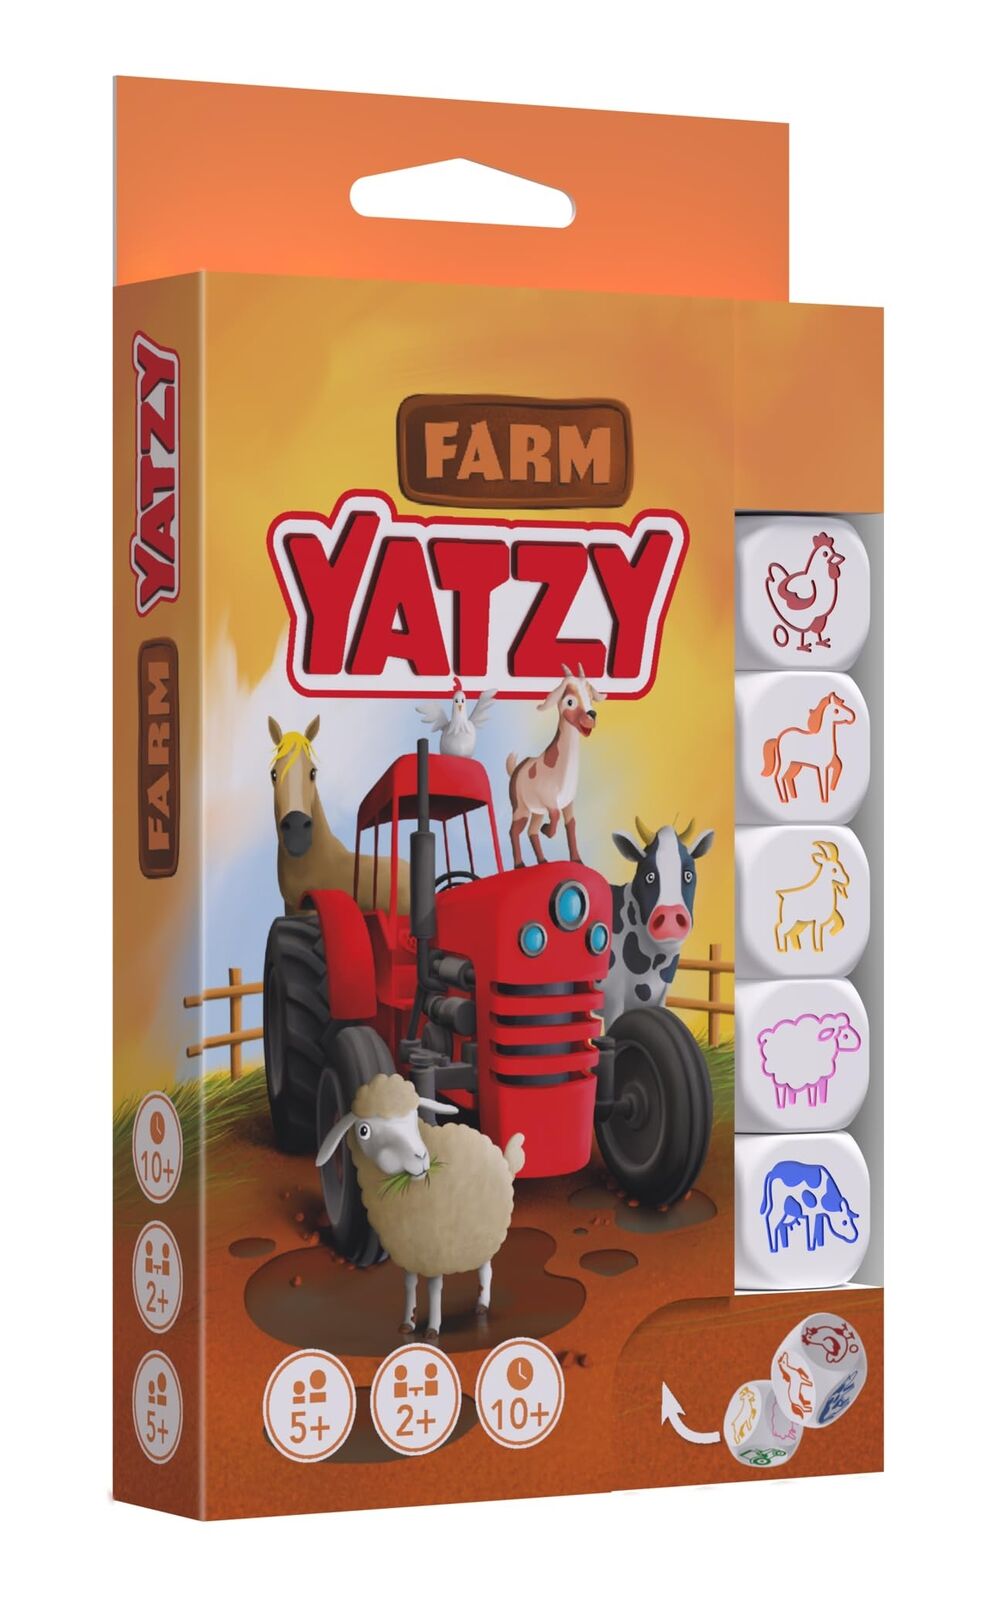 Farm Maatilan Eläimet Lasten Yatzy